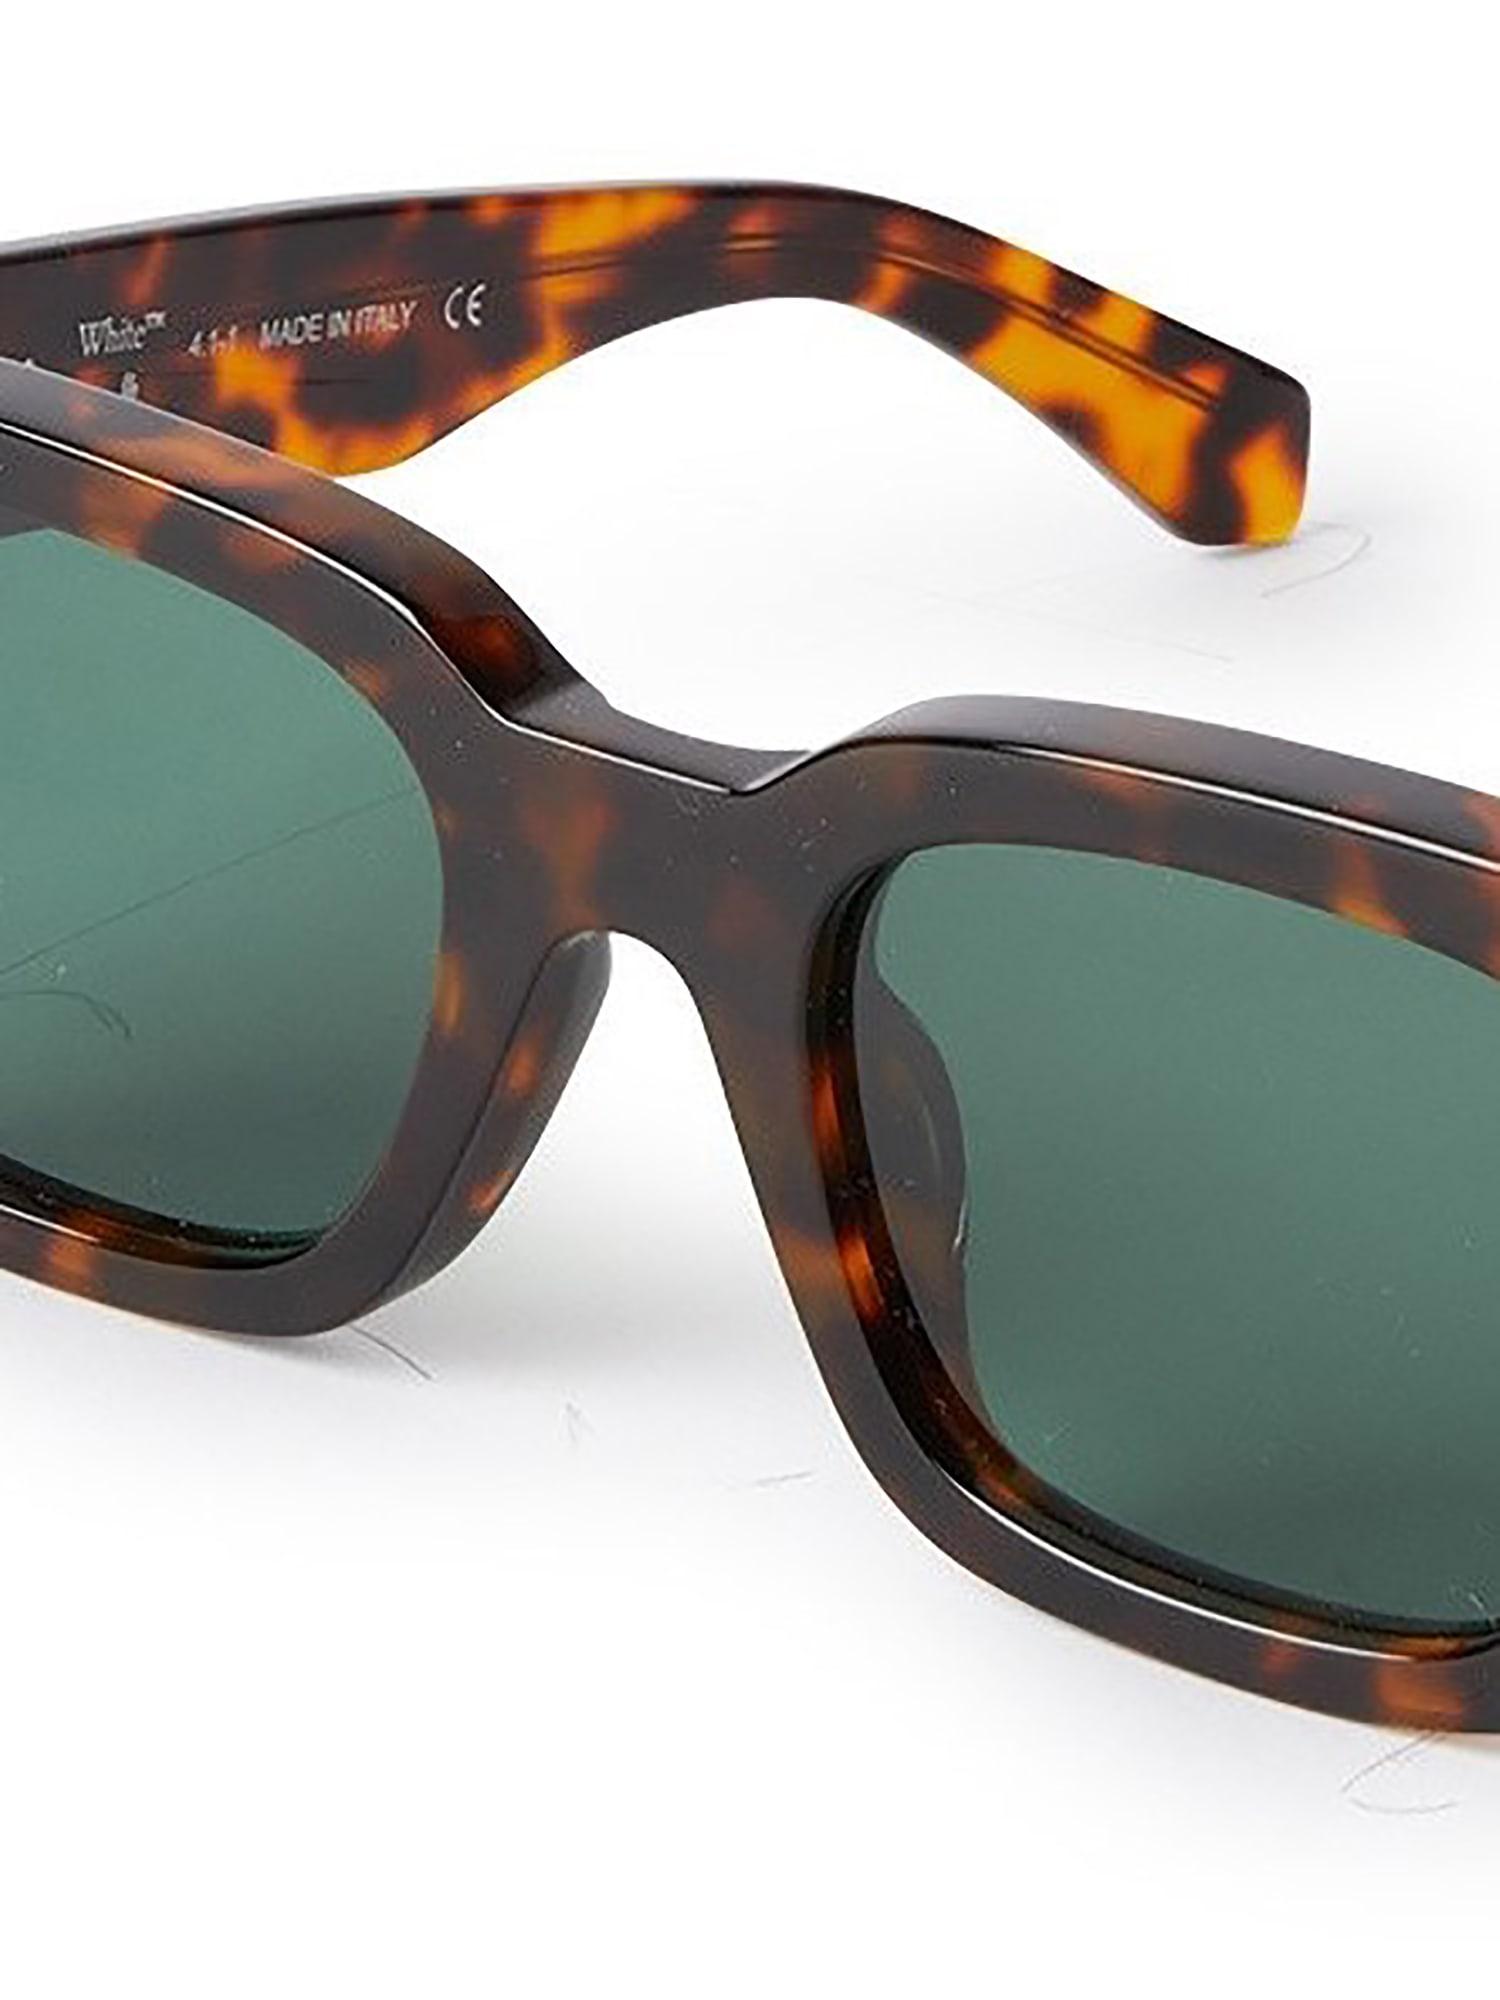 Off-White c/o Virgil Abloh Zurich Square Frame Sunglasses